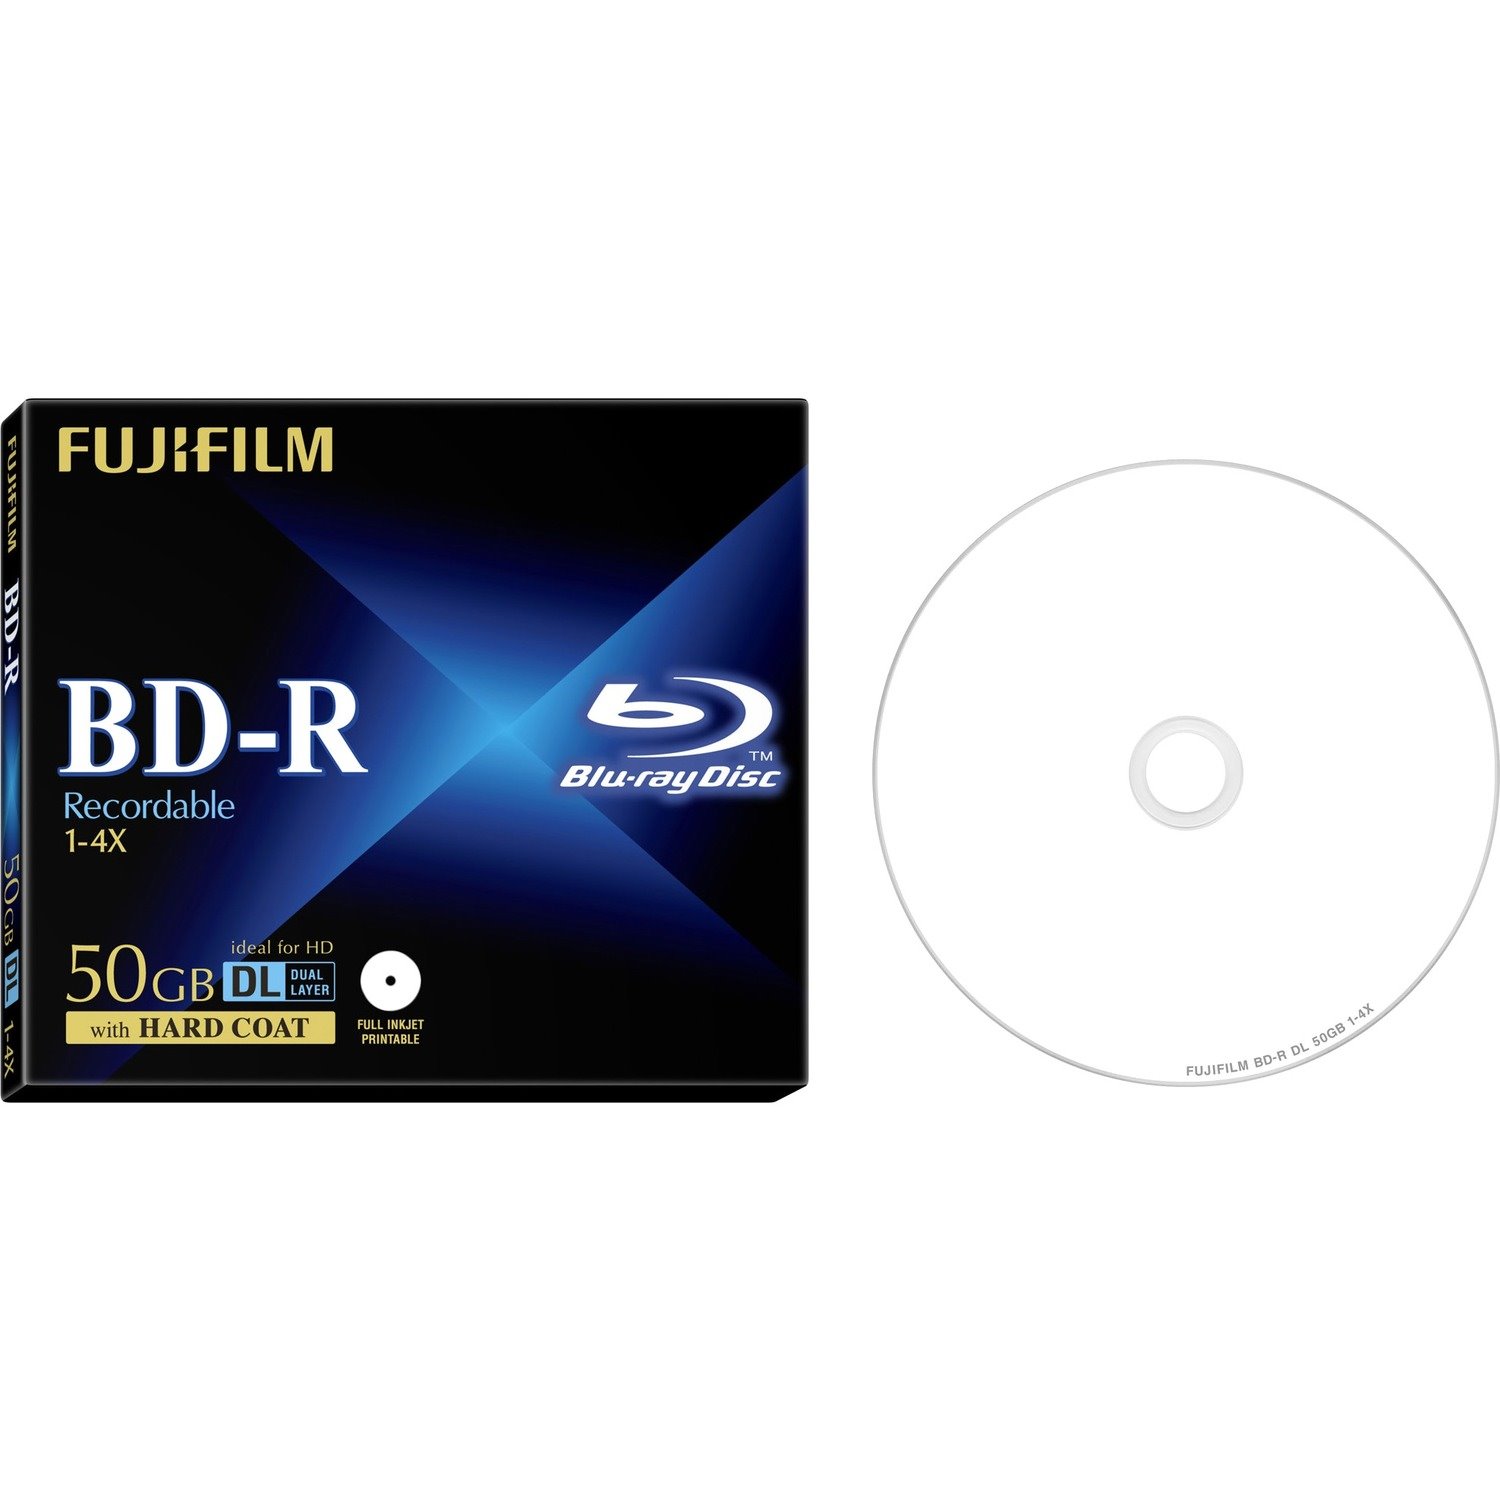 Fujifilm Blu-ray Recordable Media - BD-R - 4x - 50 GB - 5 Pack Jewel Case